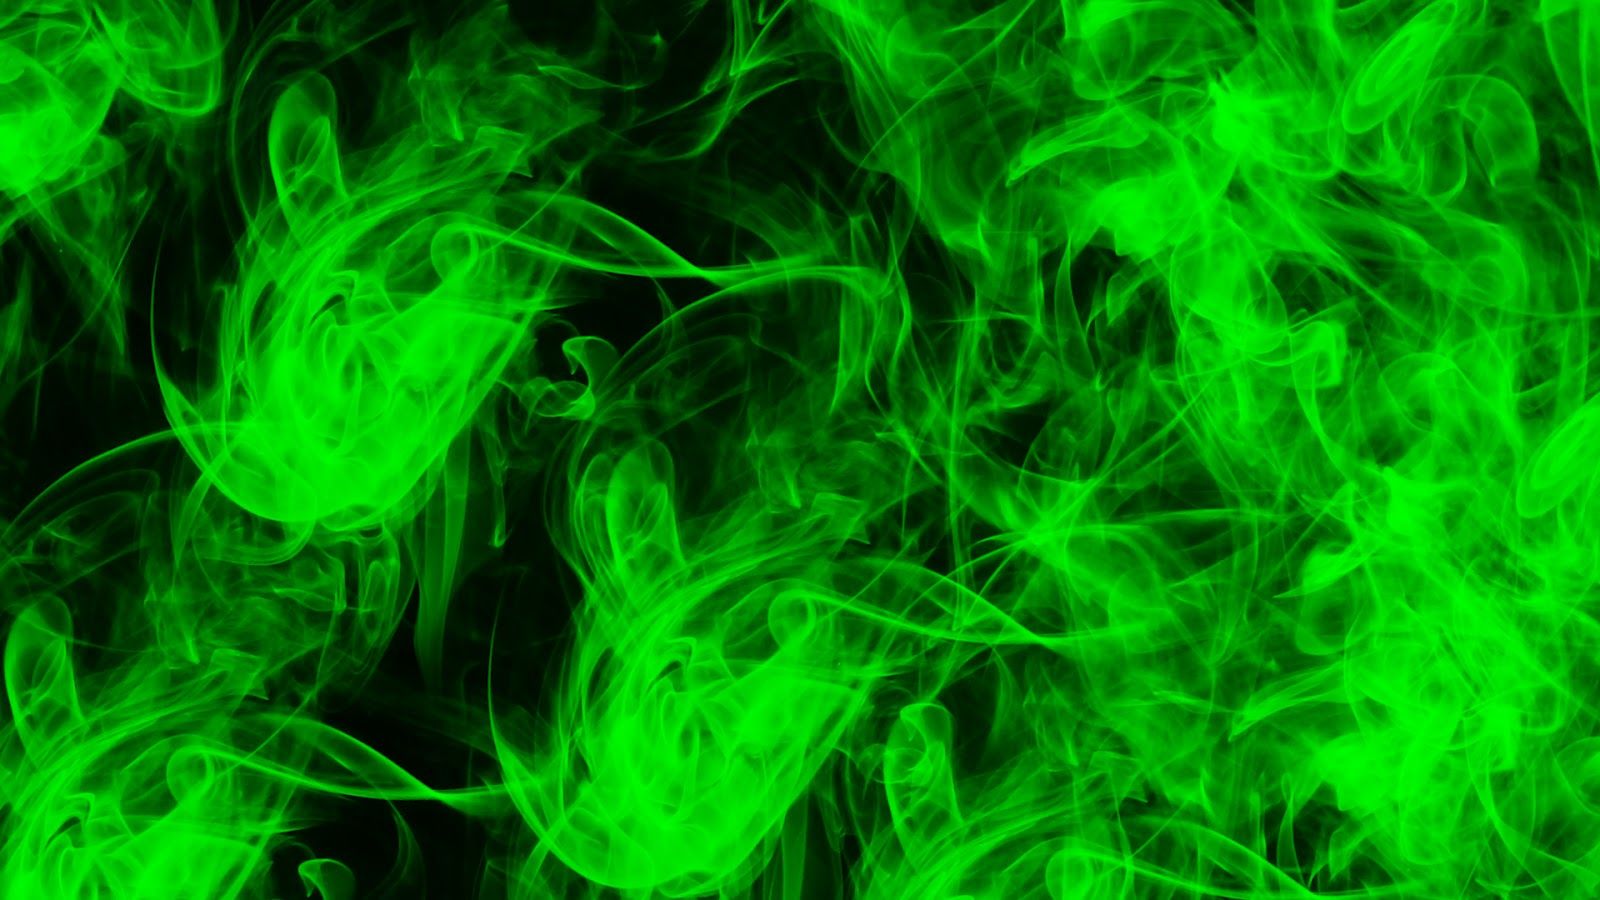 Free download Green Smoke Wallpaper Green smoke and random stuff [1600x900] for your Desktop, Mobile & Tablet. Explore Green Flame Wallpaper. Blue Flame Wallpaper, Flames Wallpaper Background for Free